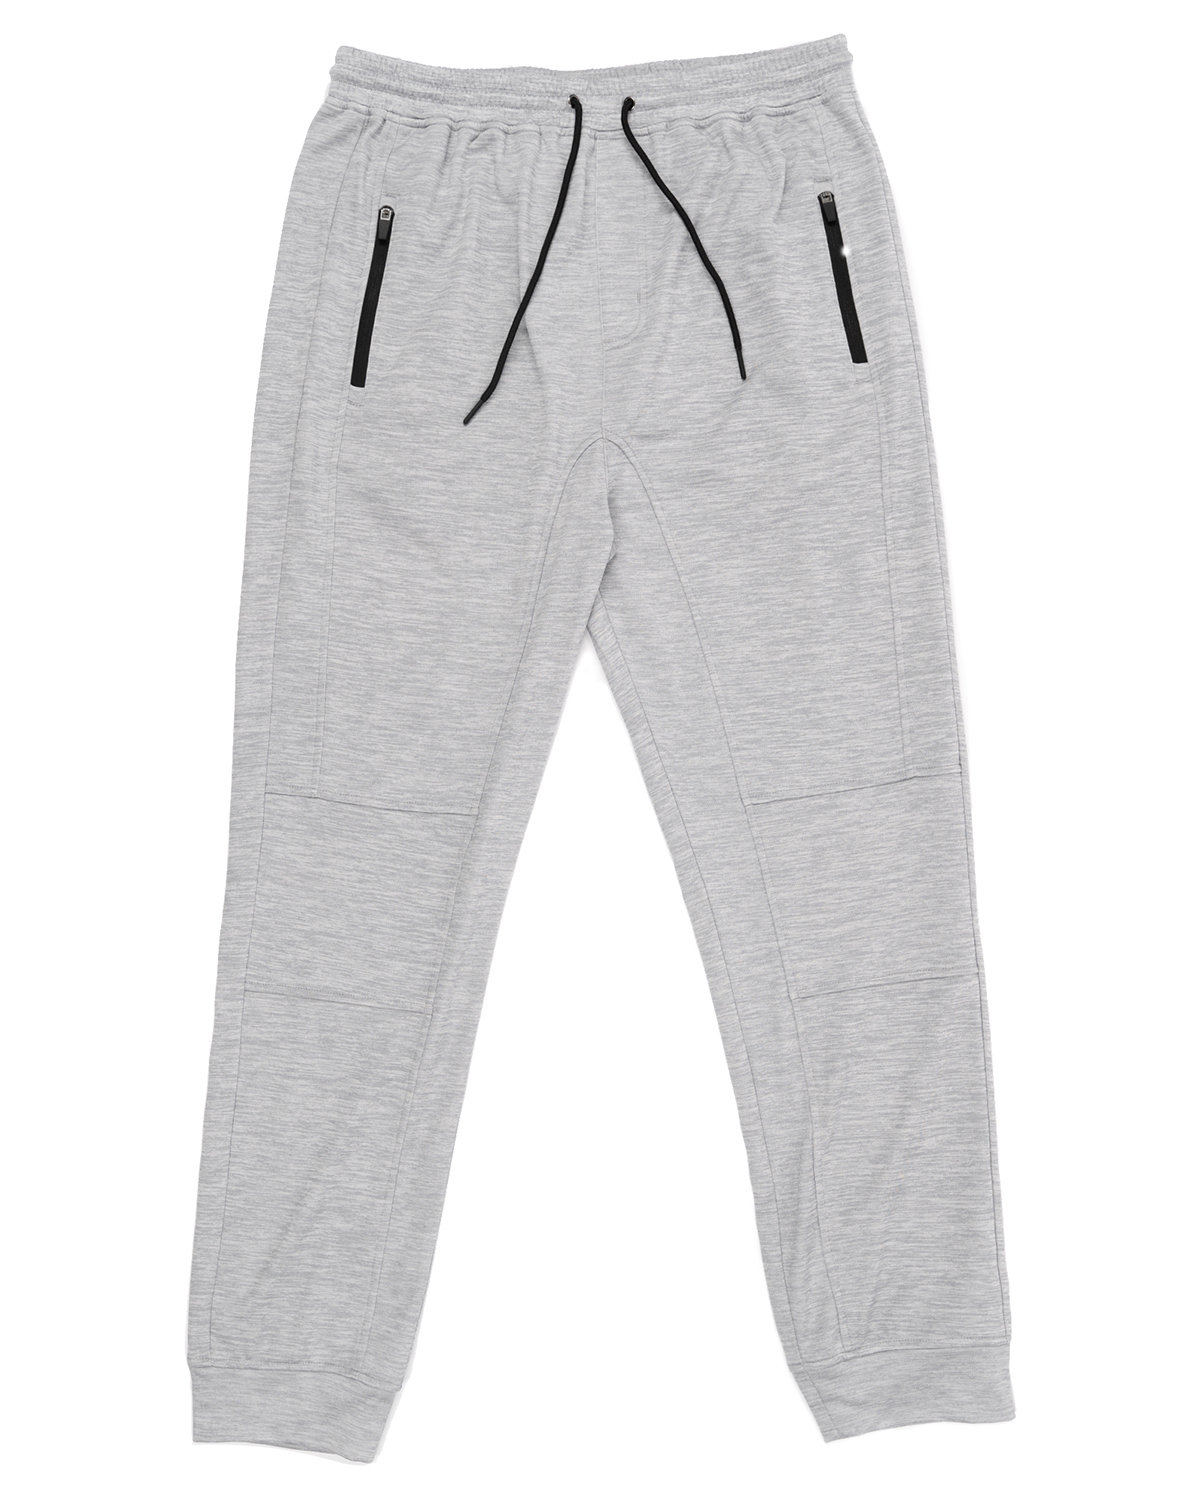 Men's Athletic Sweats, Zip-Fly Sweatpants with Internal Drawstring